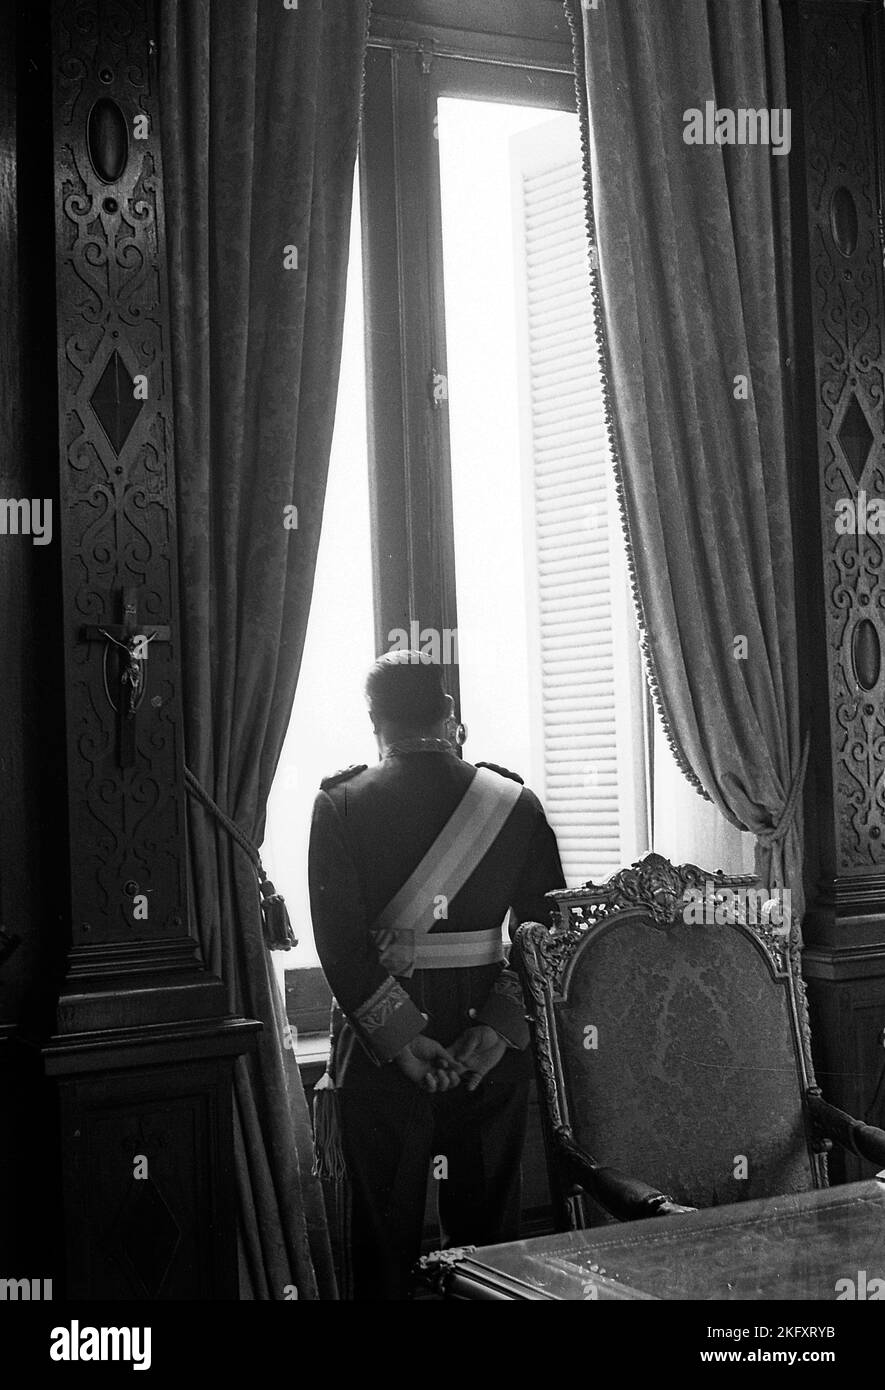 Juan Carlos Onganía, Argentine defacto president, at his office at the Casa Rosada (Government House), Buenos Aires, Argentina, 1967 Stock Photo